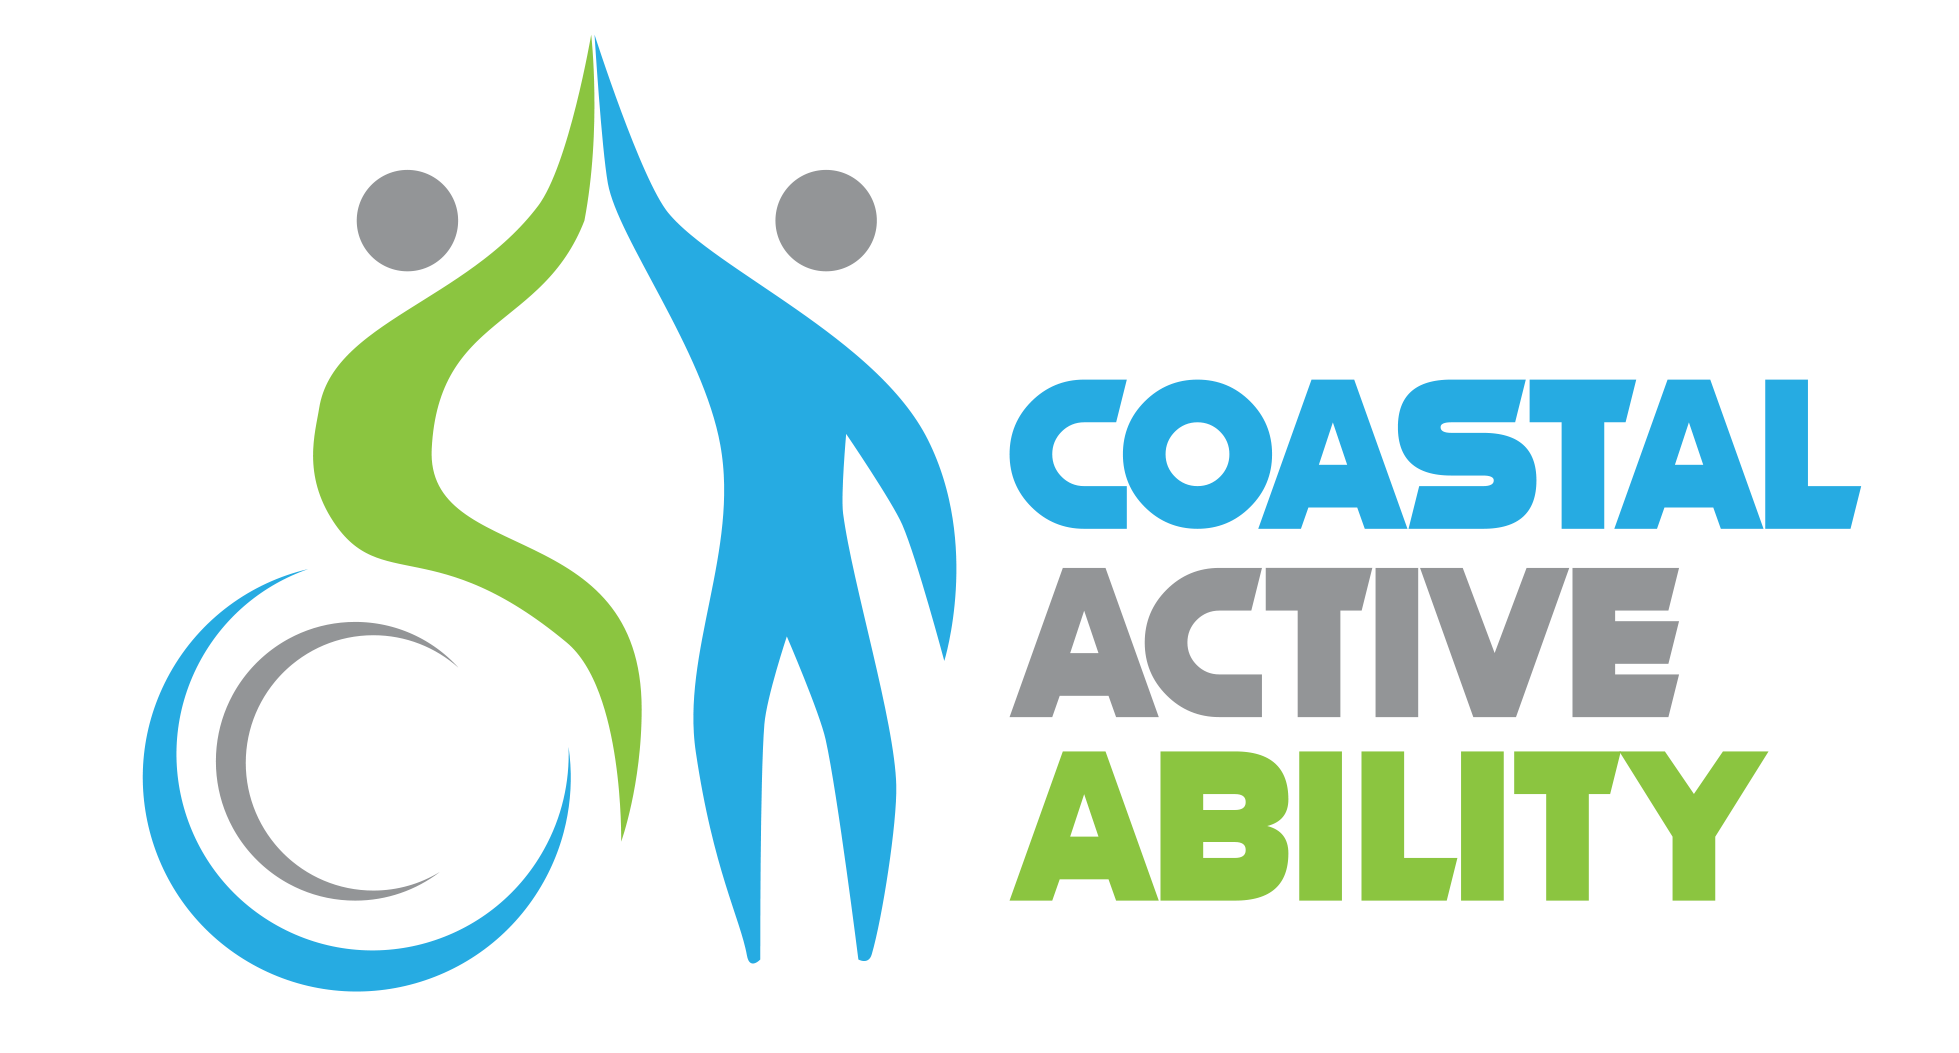 Coastal Active Ability